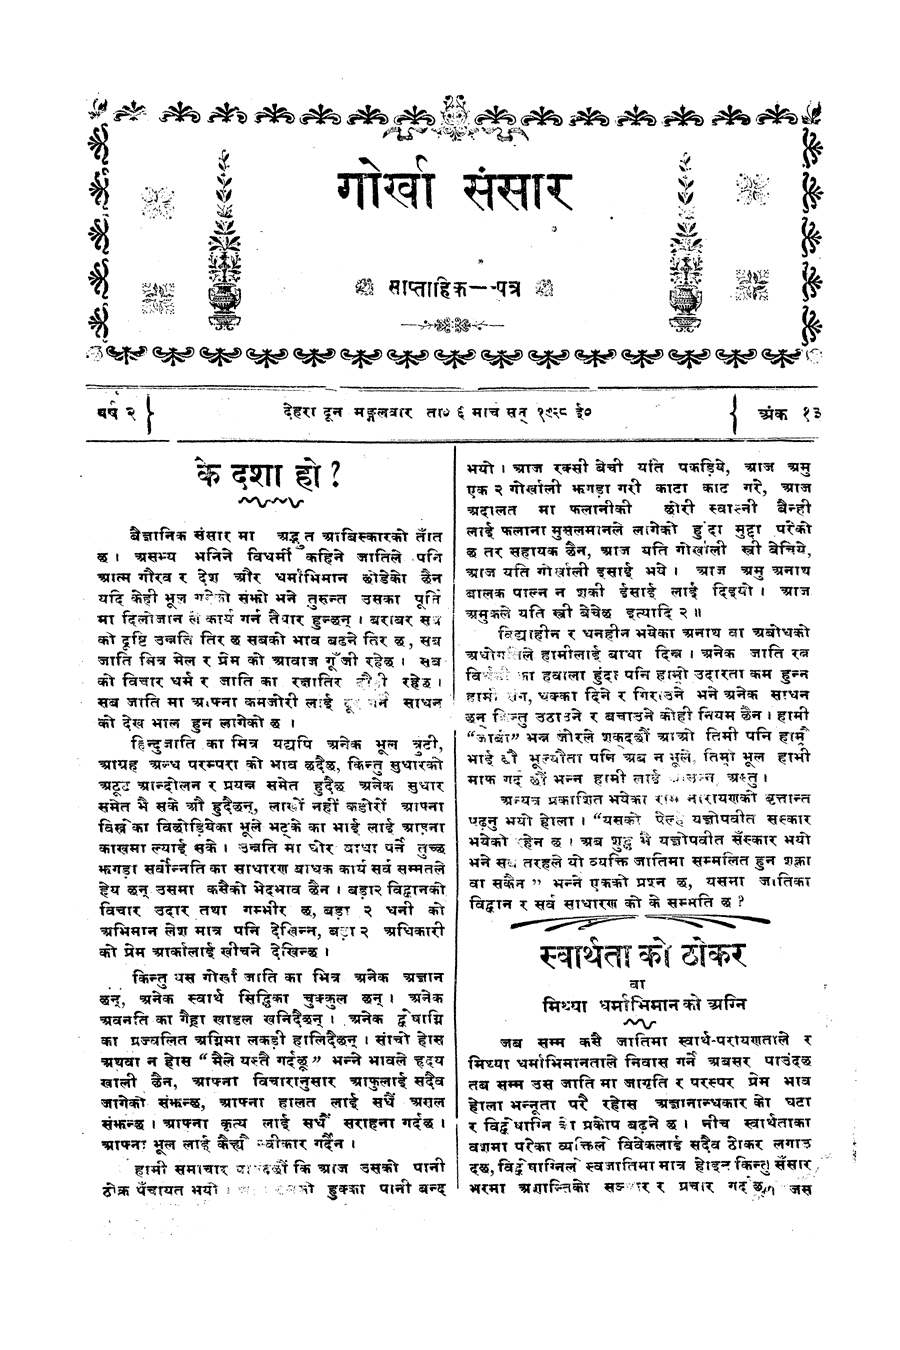 Gorkha Sansar, 6 Mar 1928, page 3